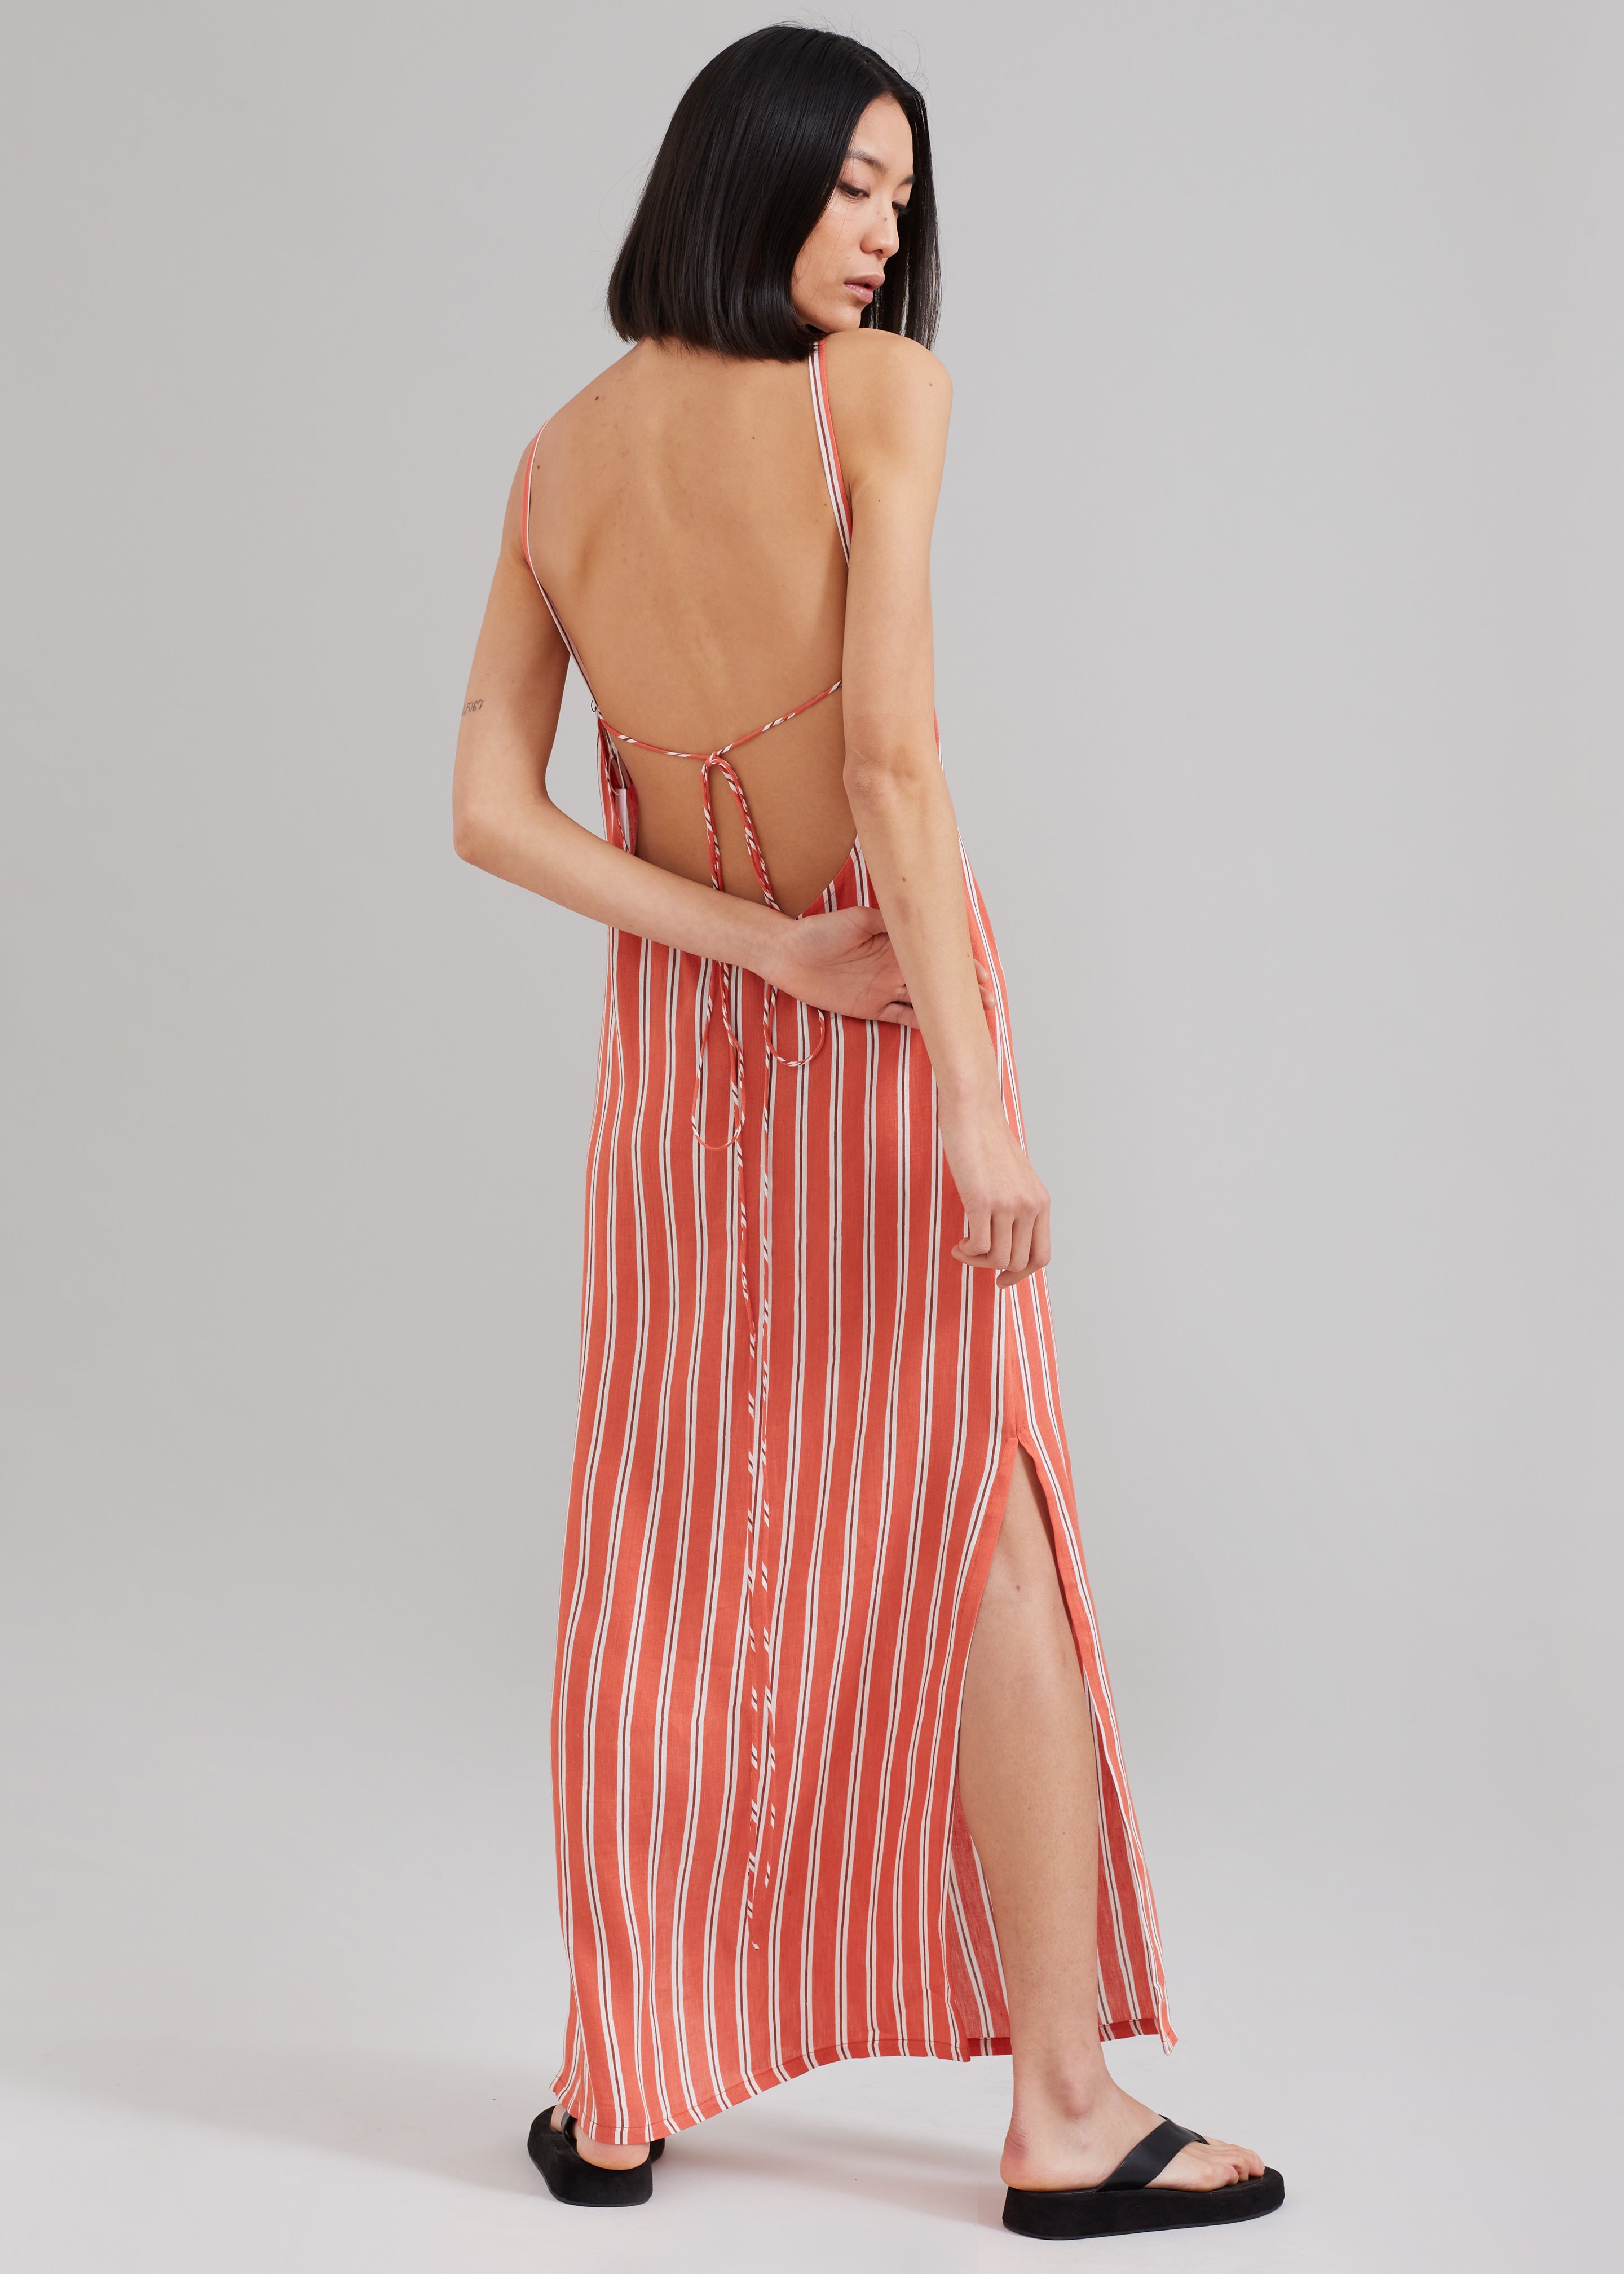 MATIN Isola Open Back Dress - Red Stripe - 8